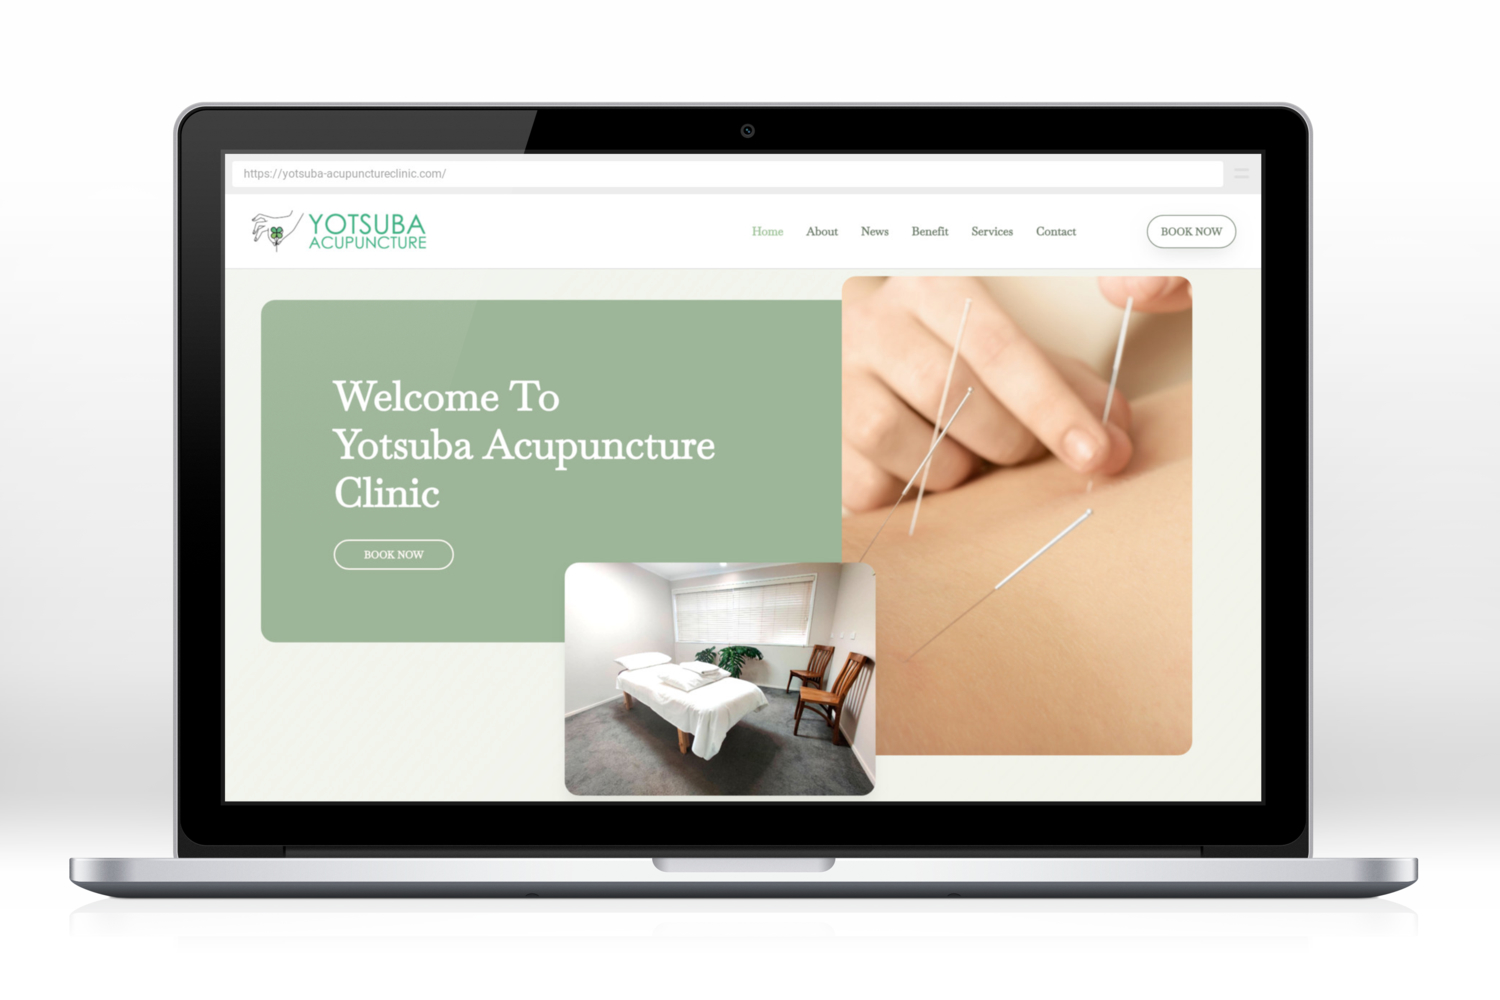 yotsuba acupuncture clinic